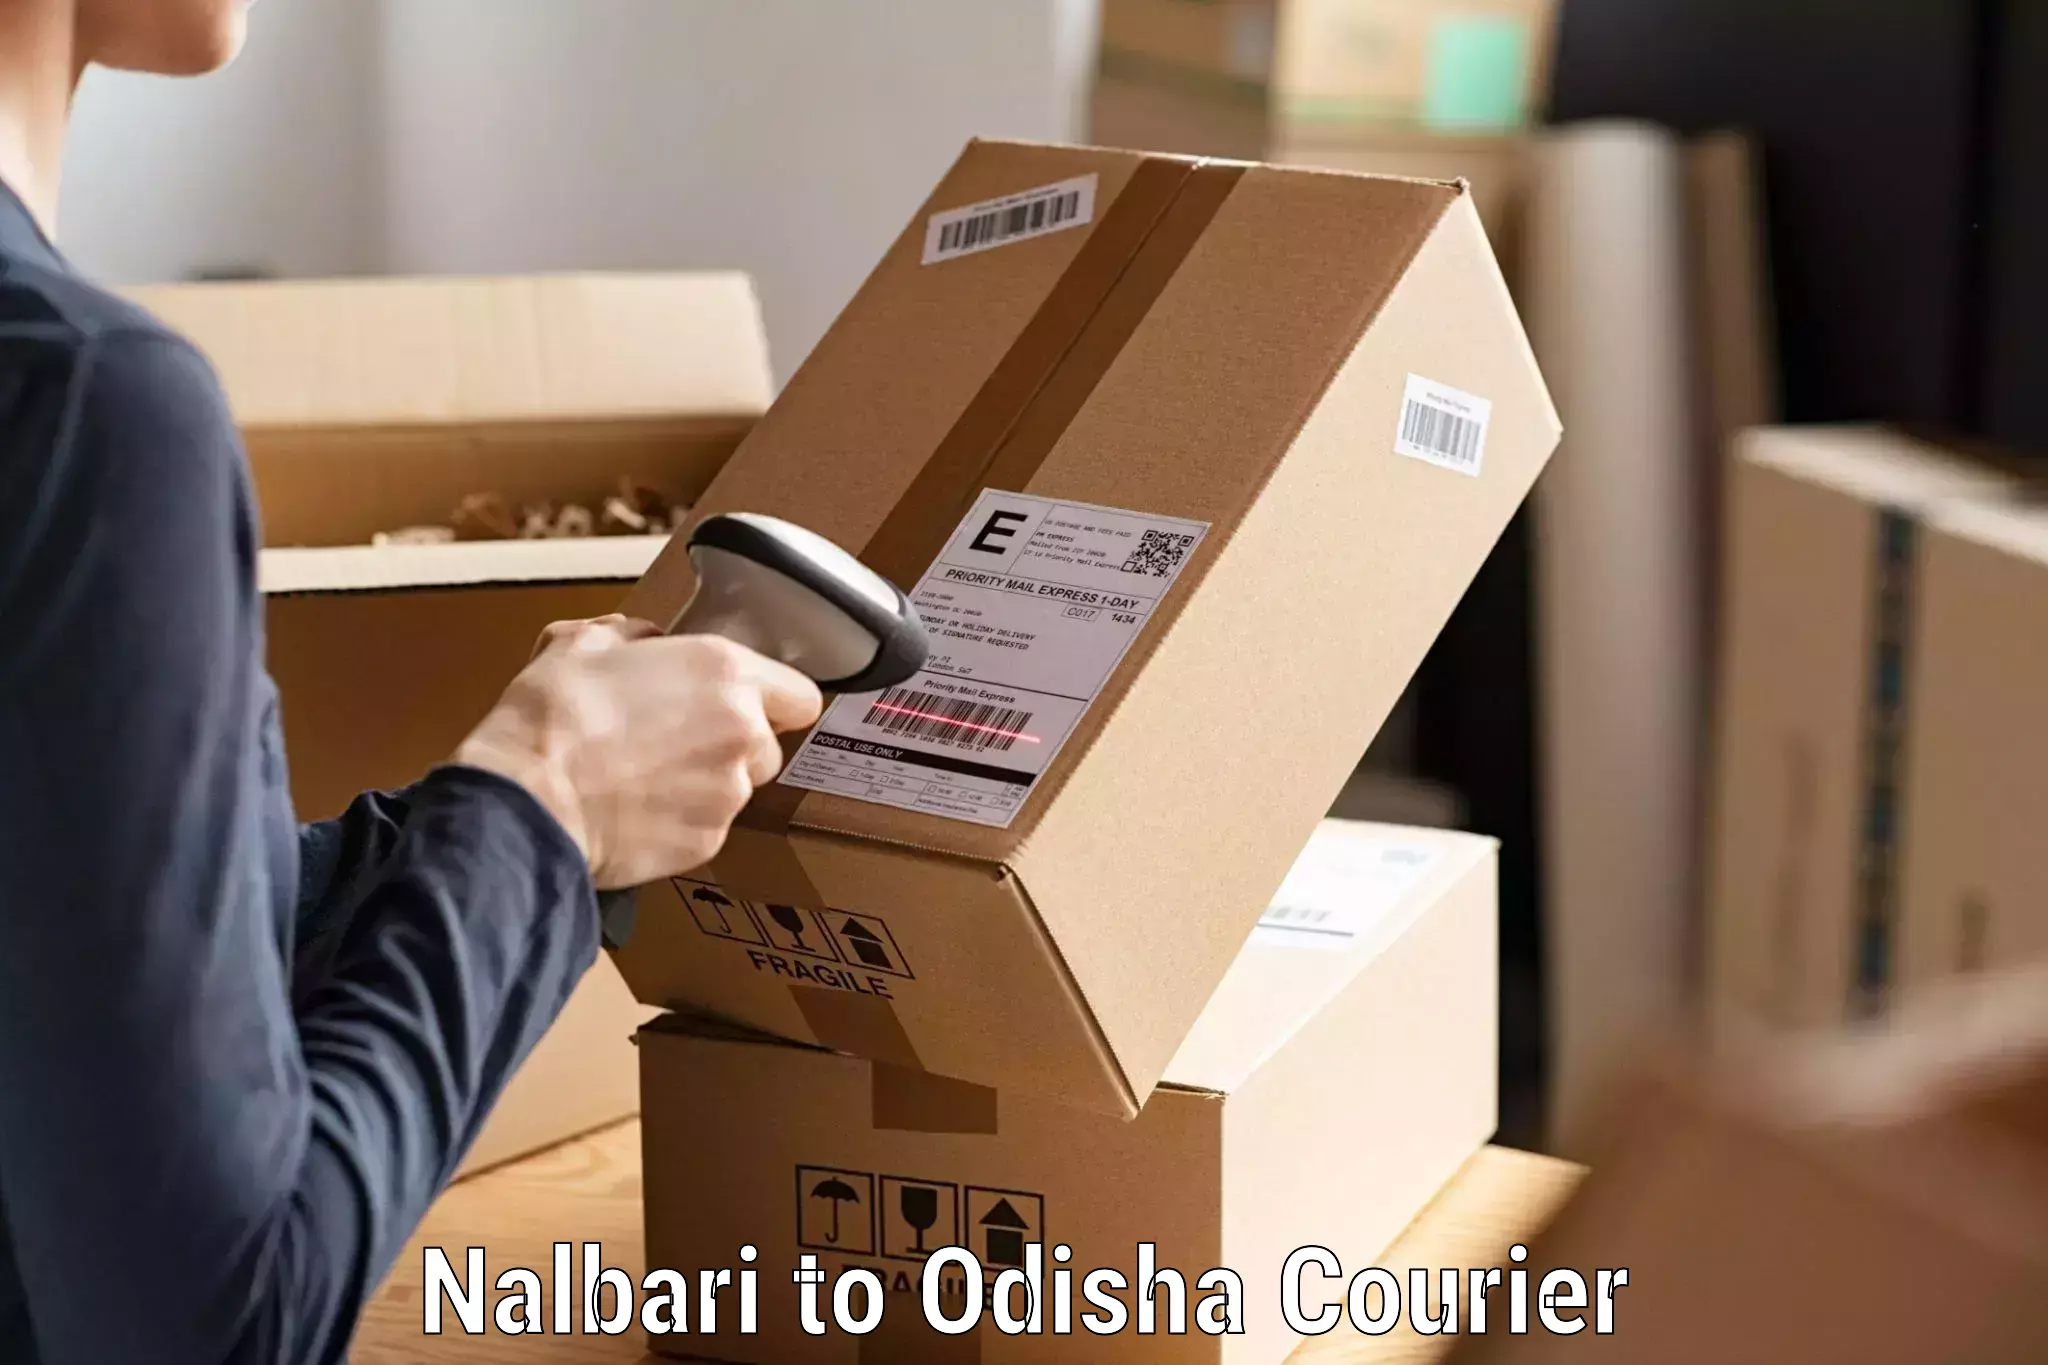 Express delivery network Nalbari to Chandinchowk